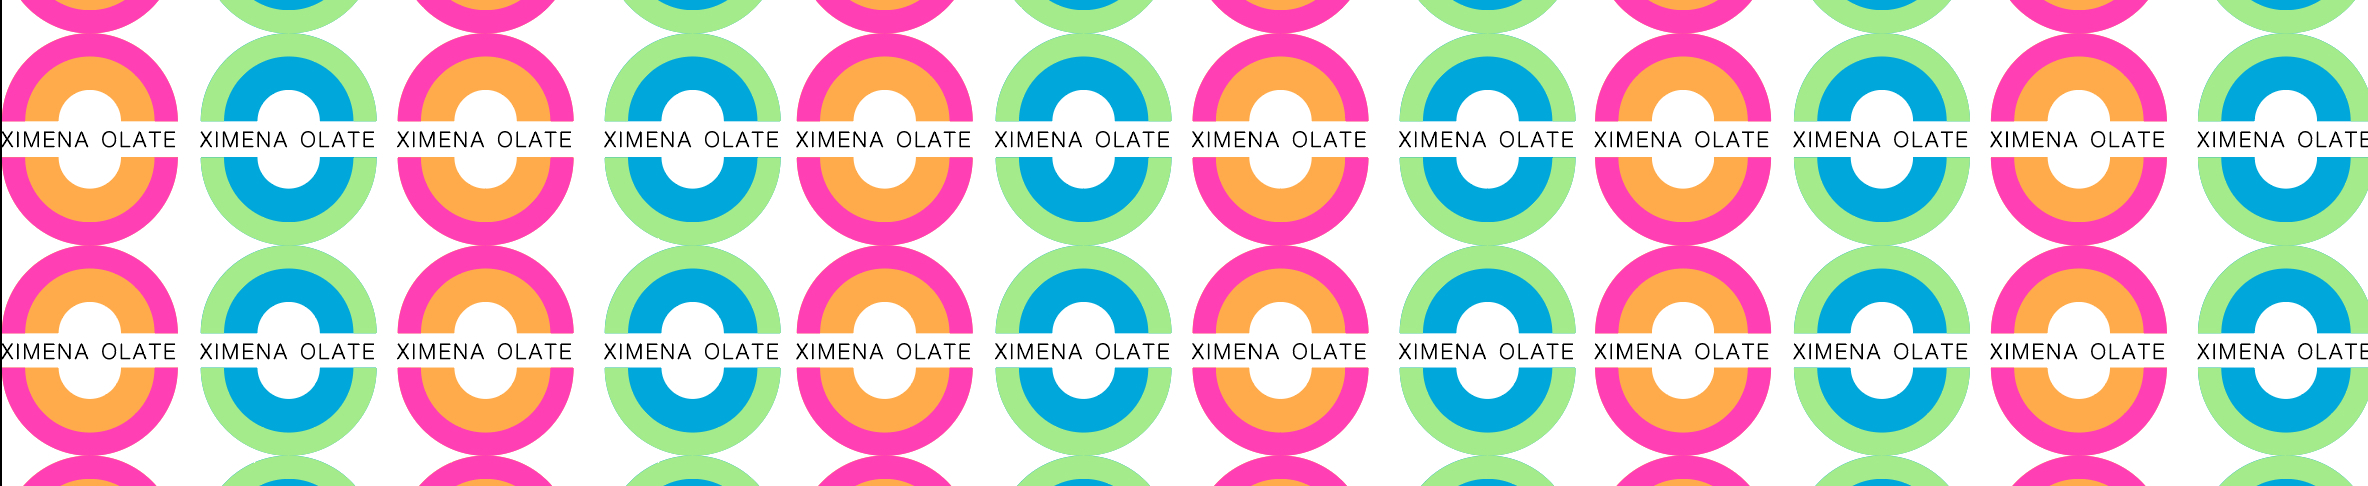 Ximena Olate's profile banner